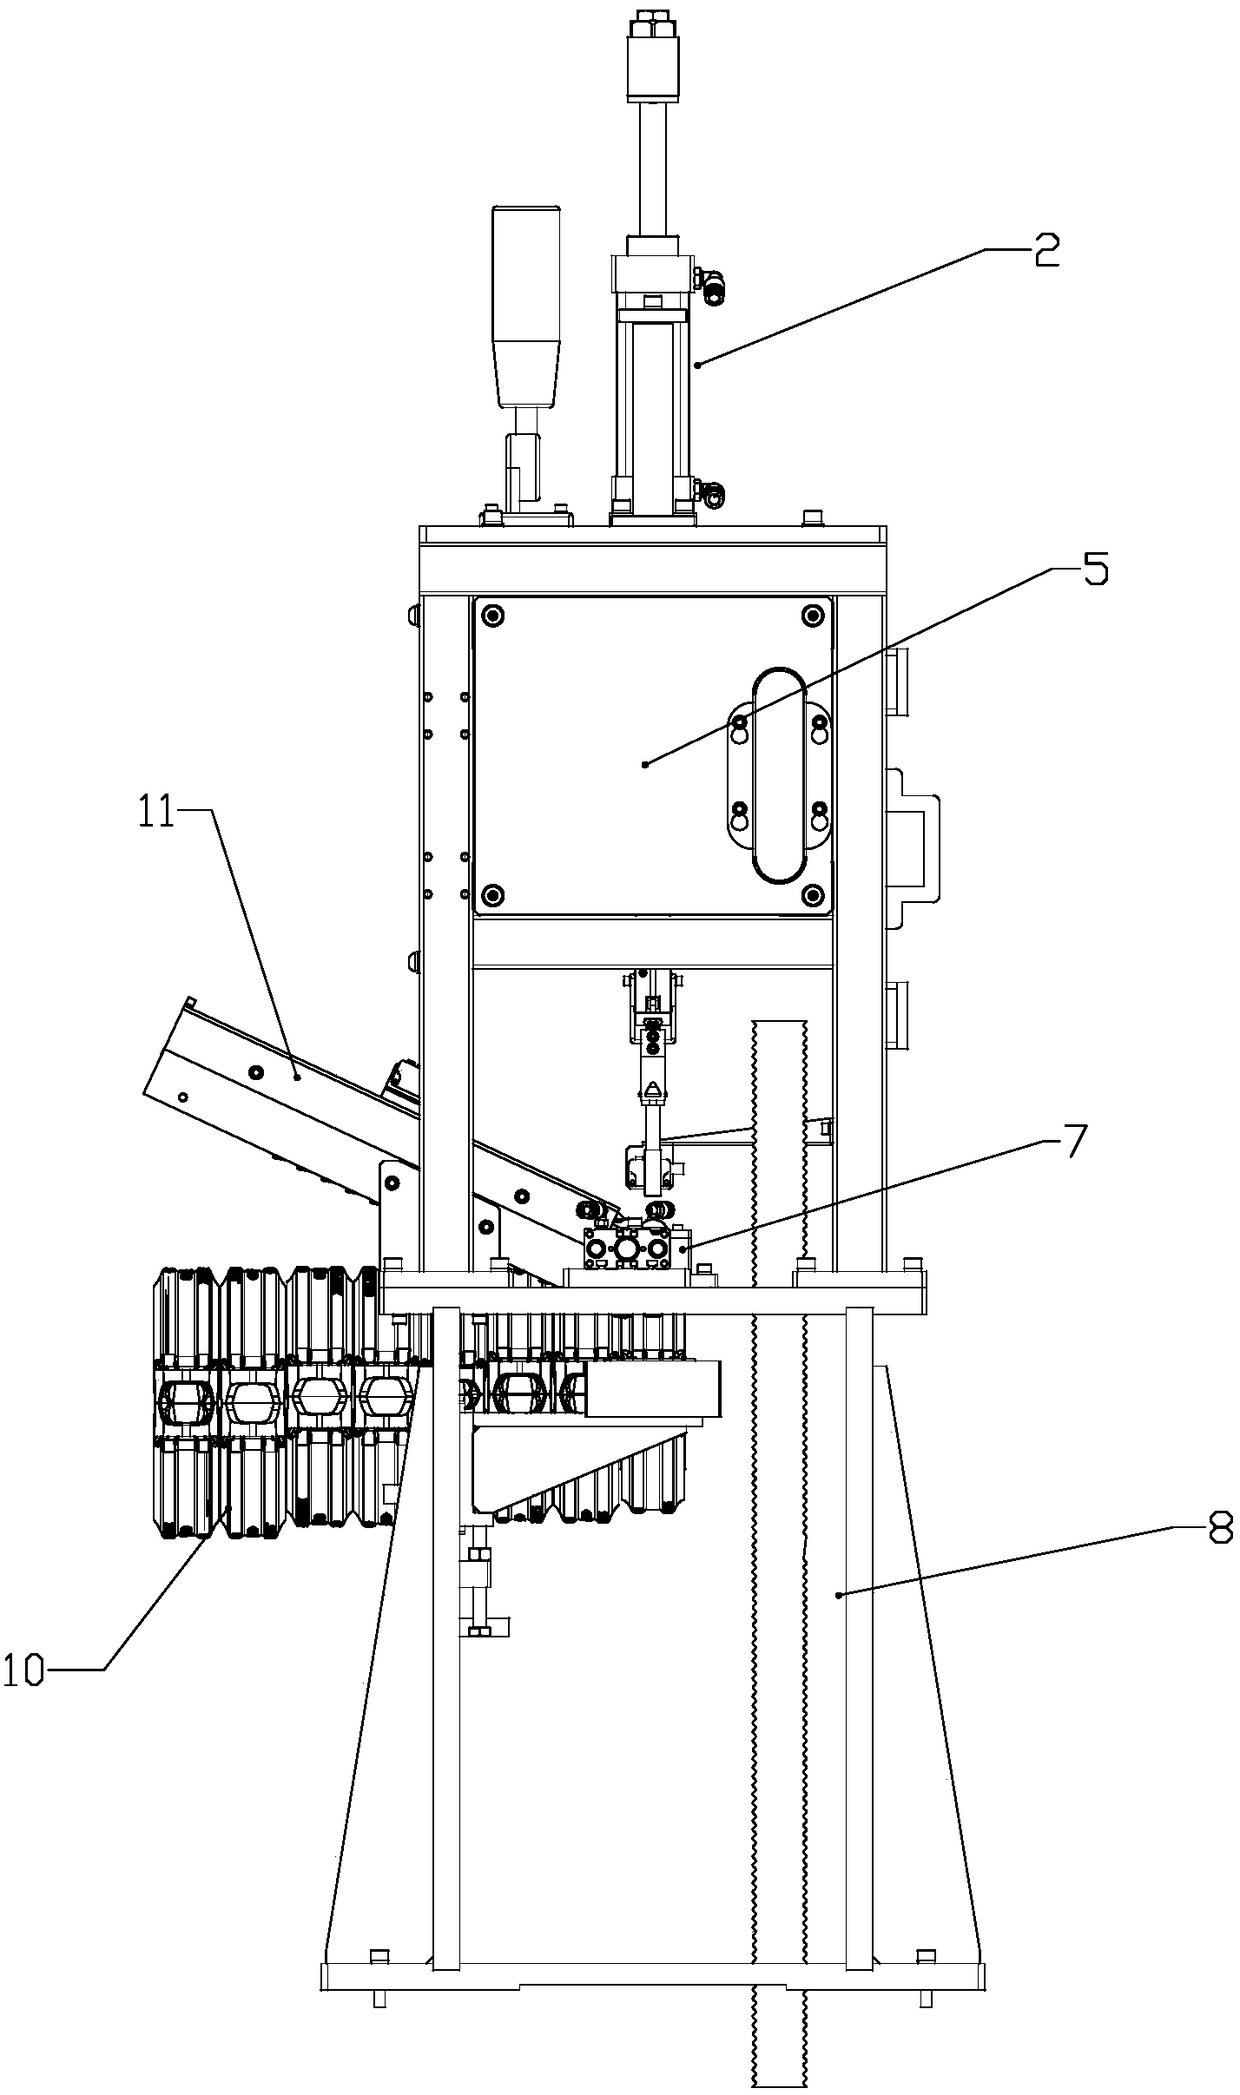 Automatic bolt grabbing and feeding mechanism